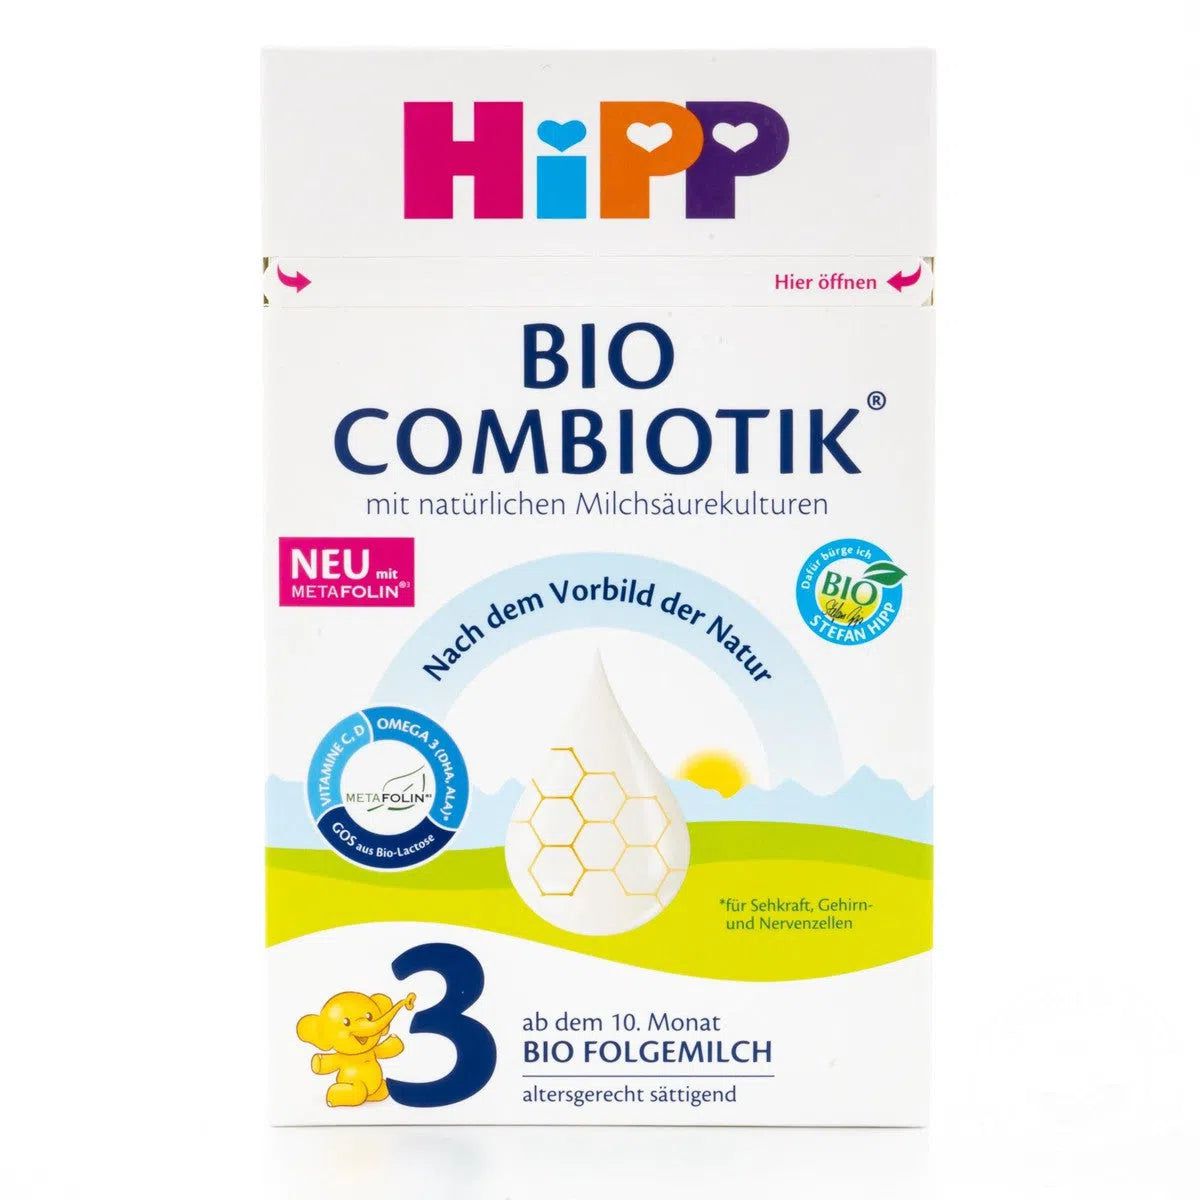 HiPP Stage 3 Combiotic Formula - German Version (600g) - 8 Boxes